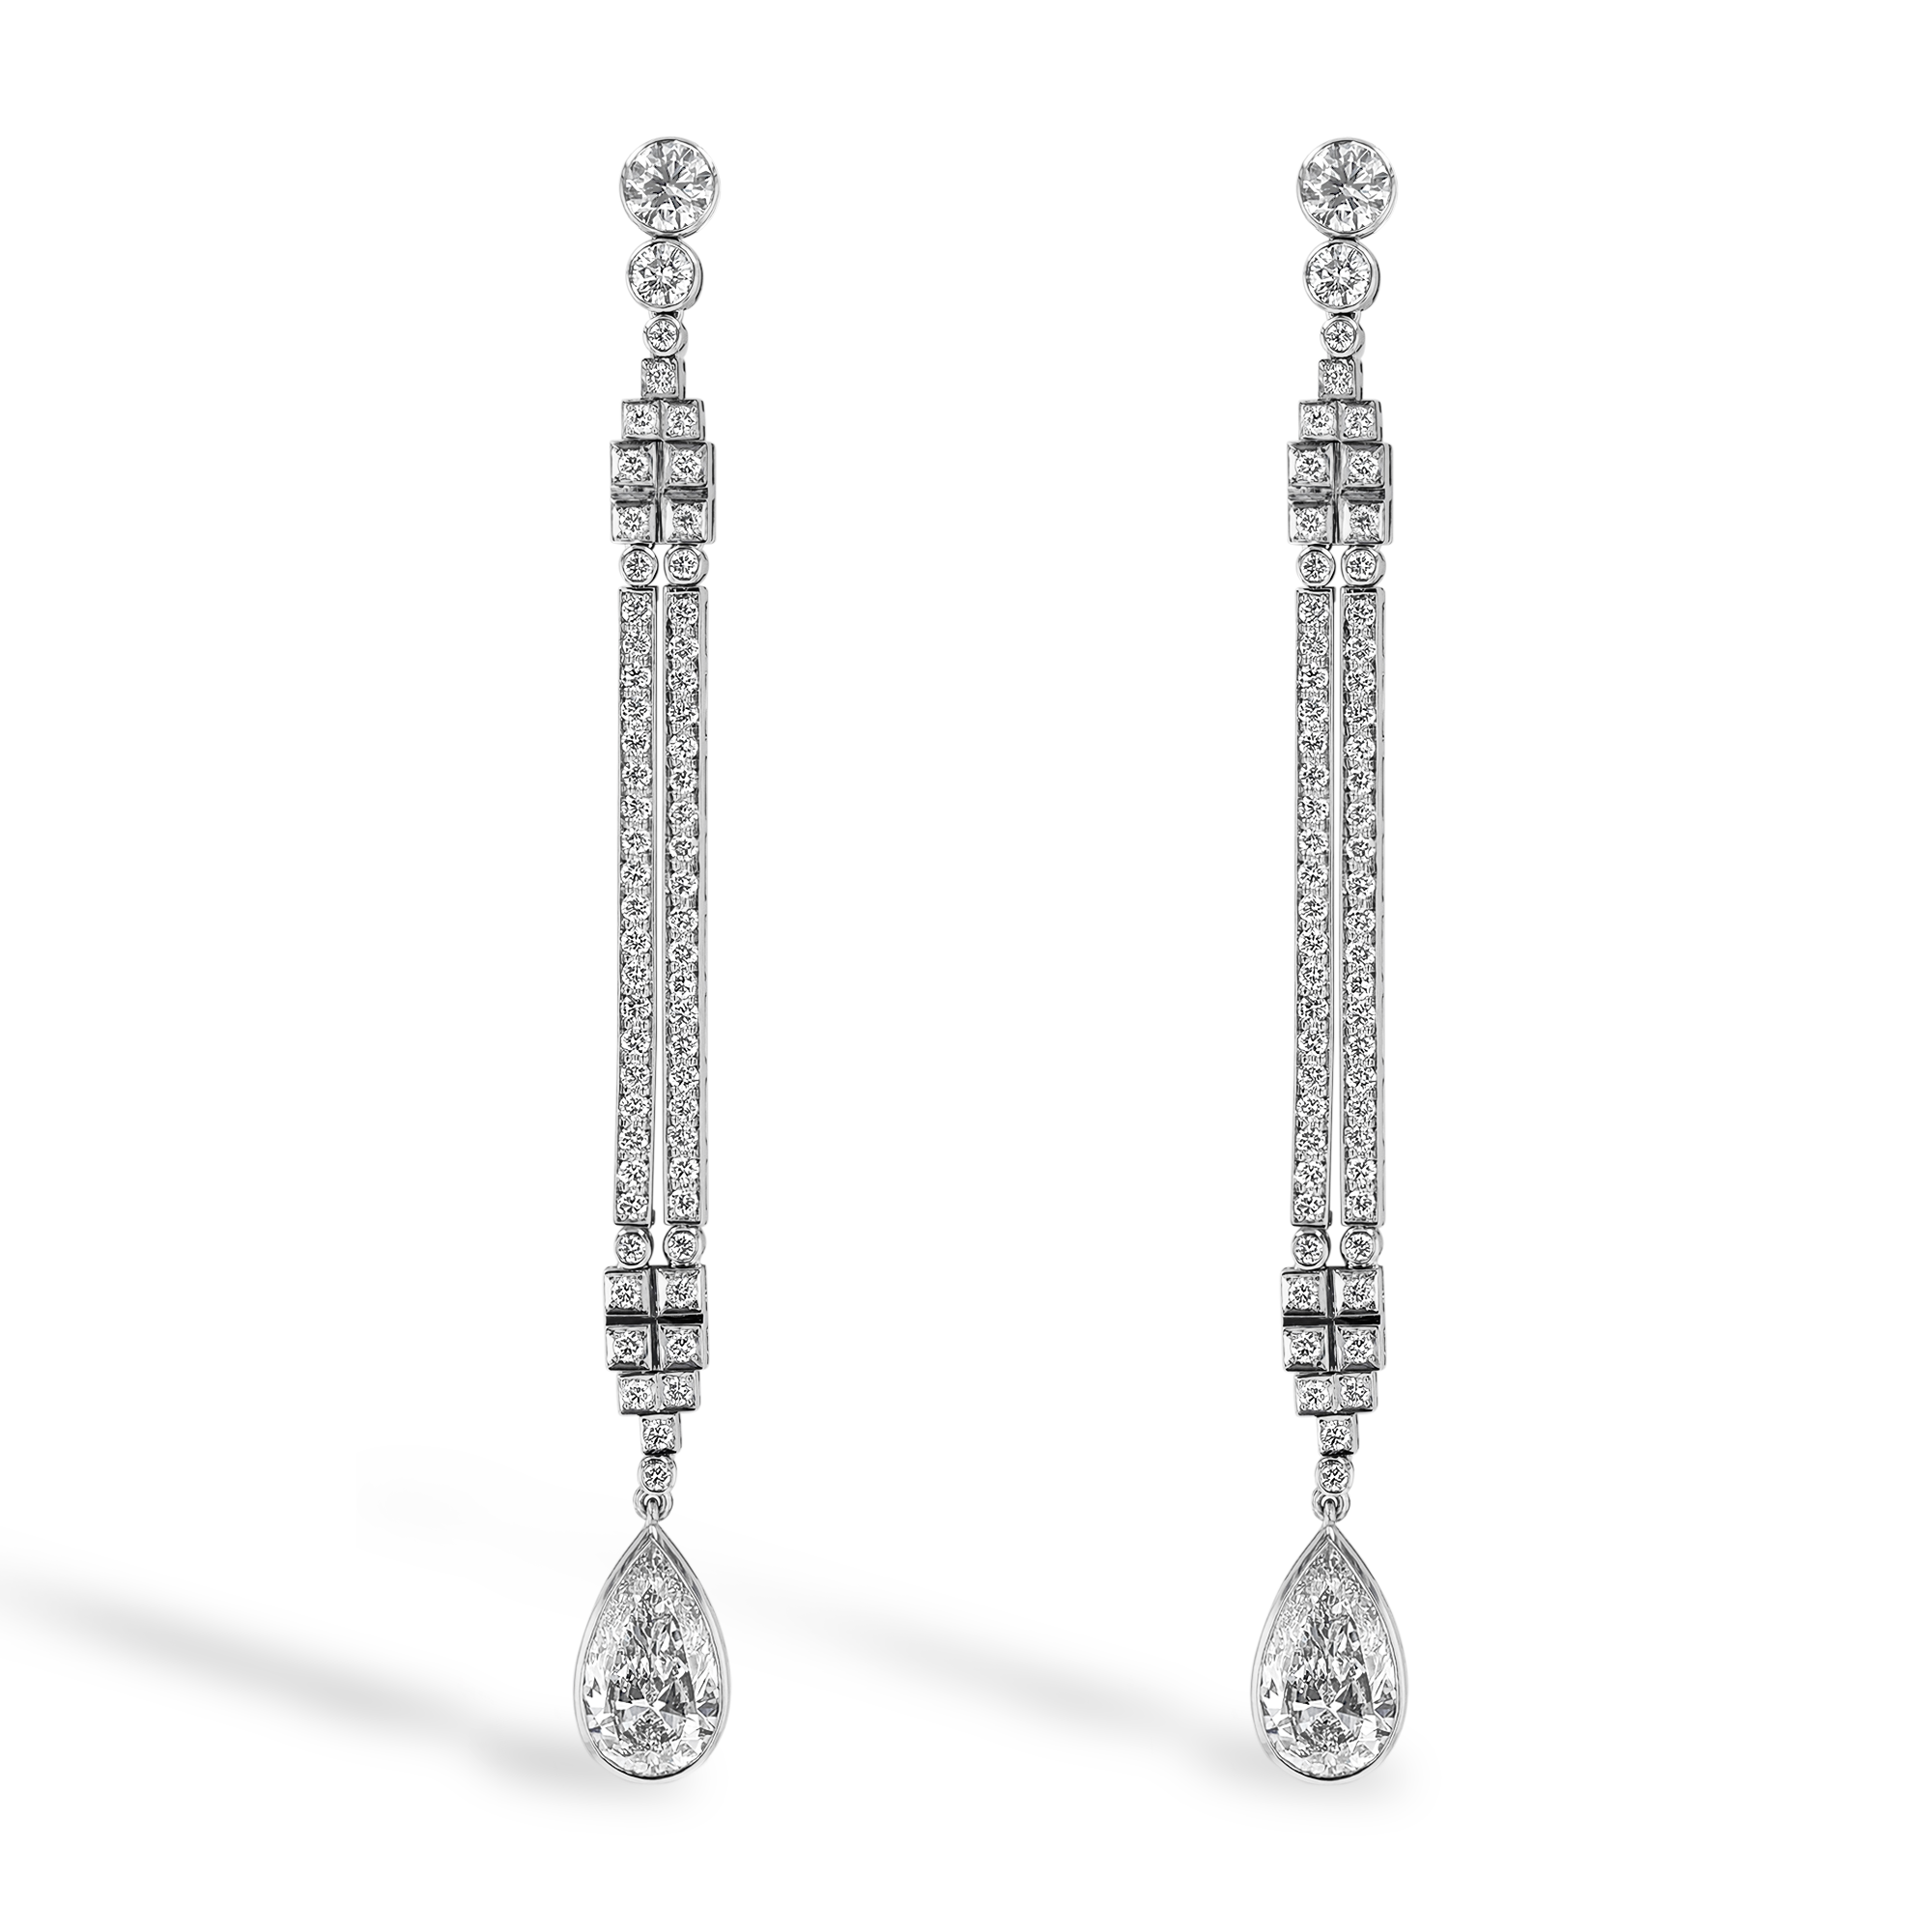 Masterpiece Pearshape Diamond Articulated Drop Earrings Pearshape Cut, Rubover Set_1